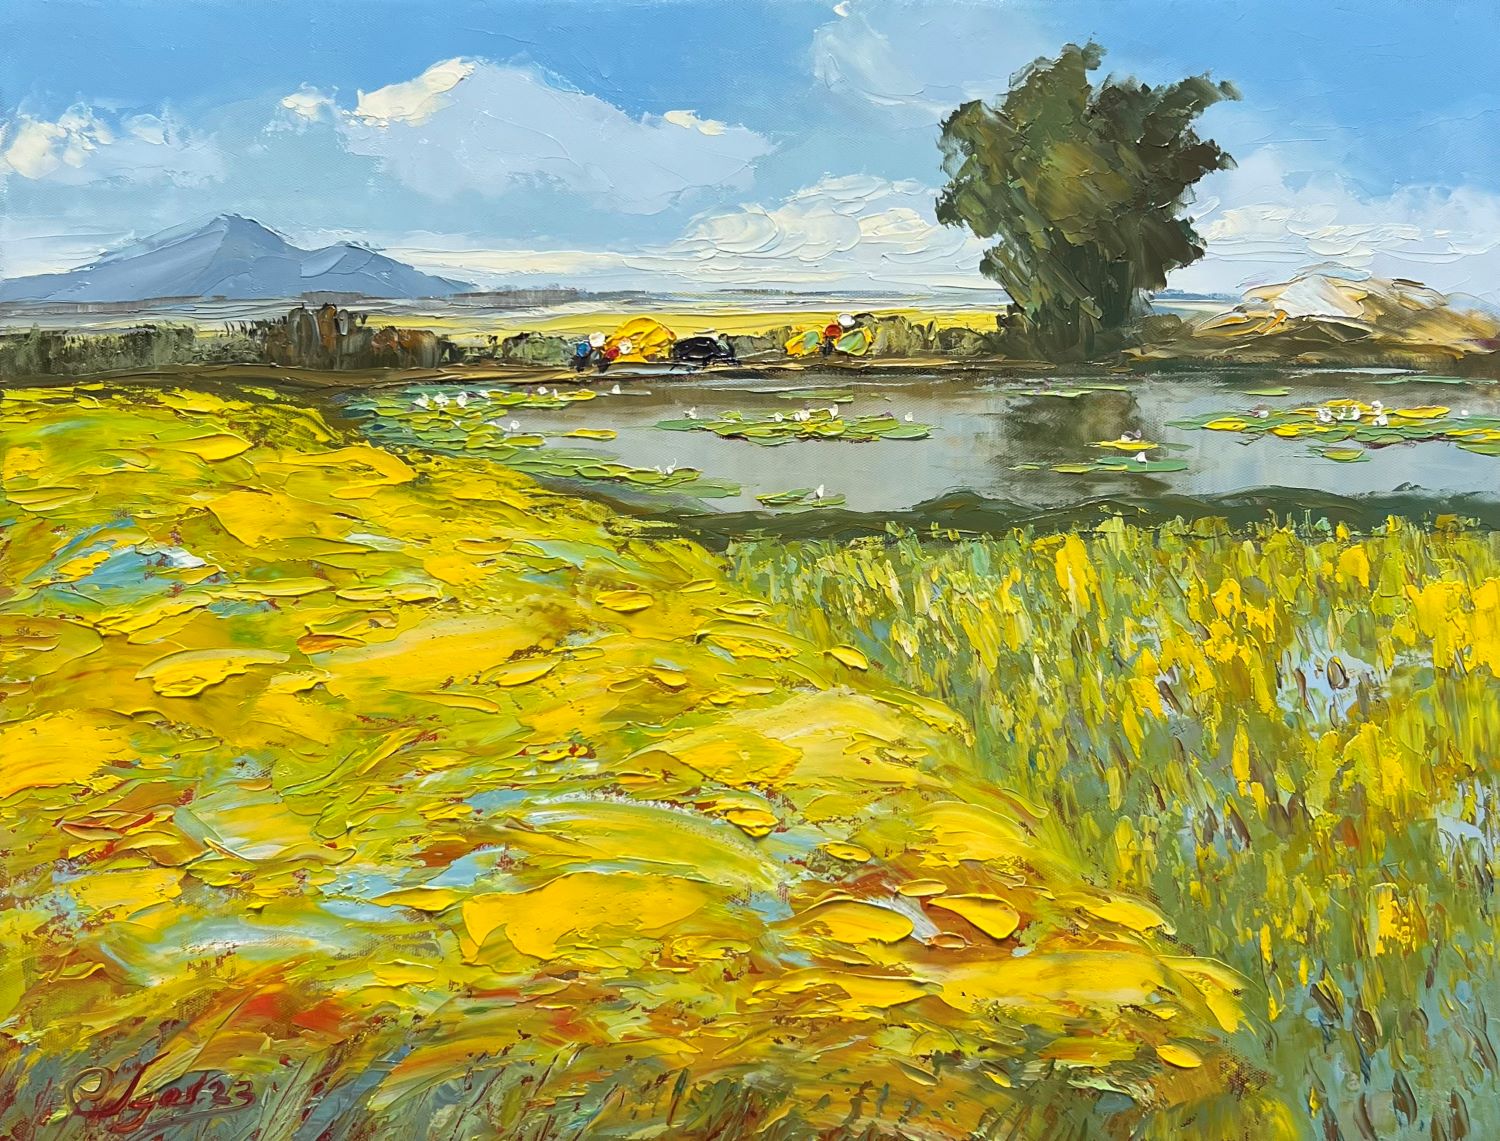 Golden Season IV - Vietnamese Oil Painting by Artist Dang Dinh Ngo